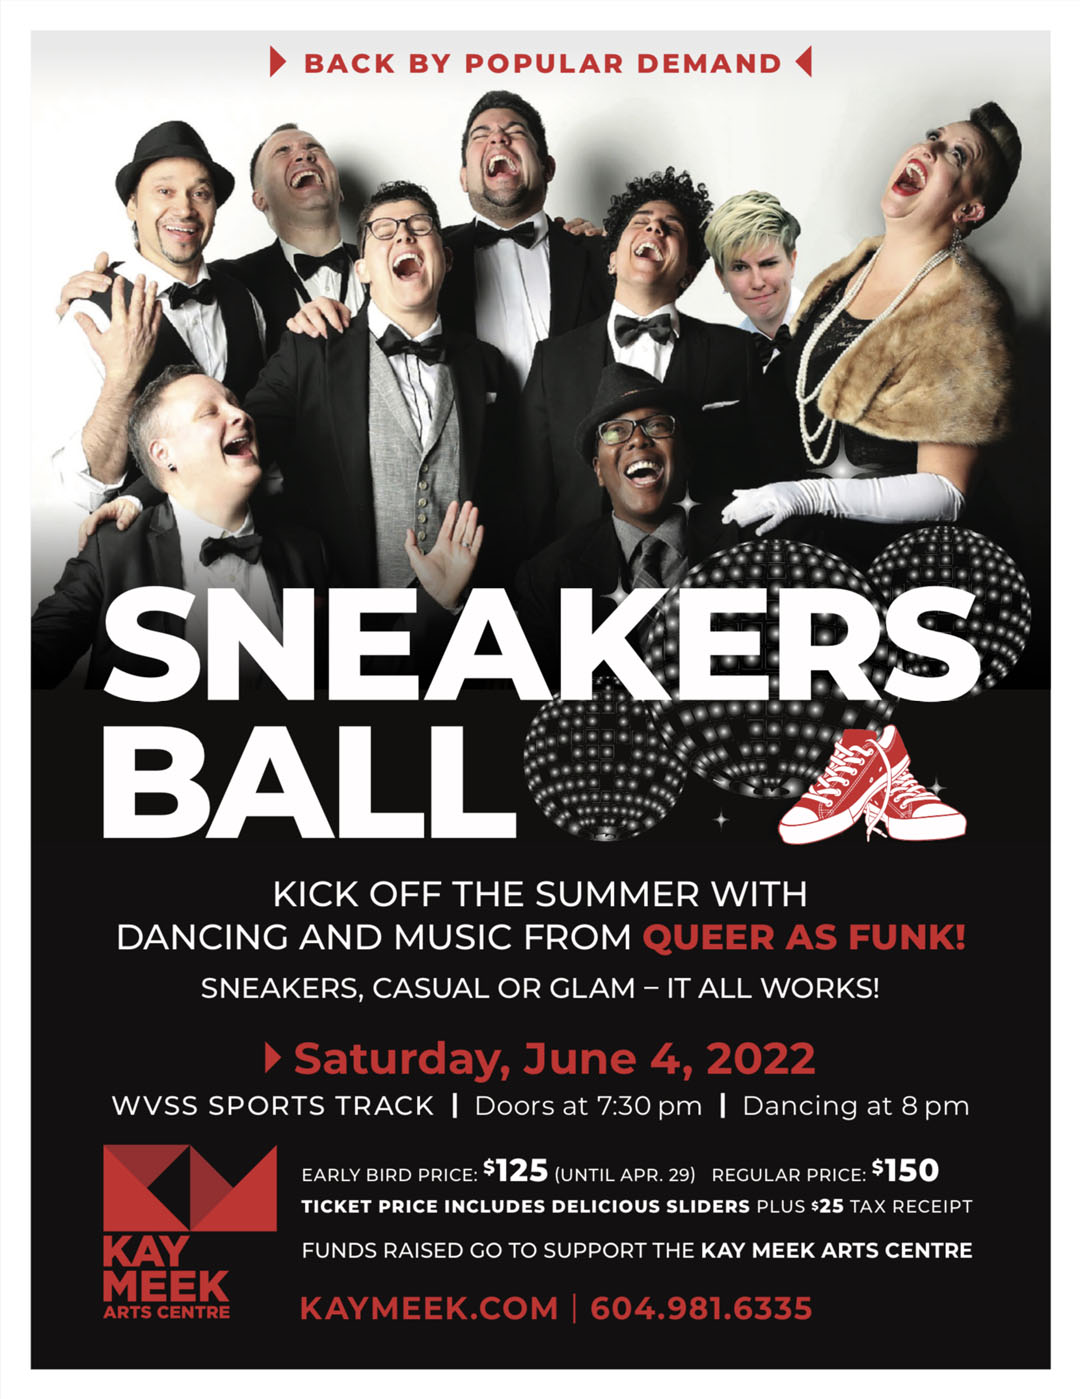 Sneakers Ball Kay Meek Arts Centre June 4 2022